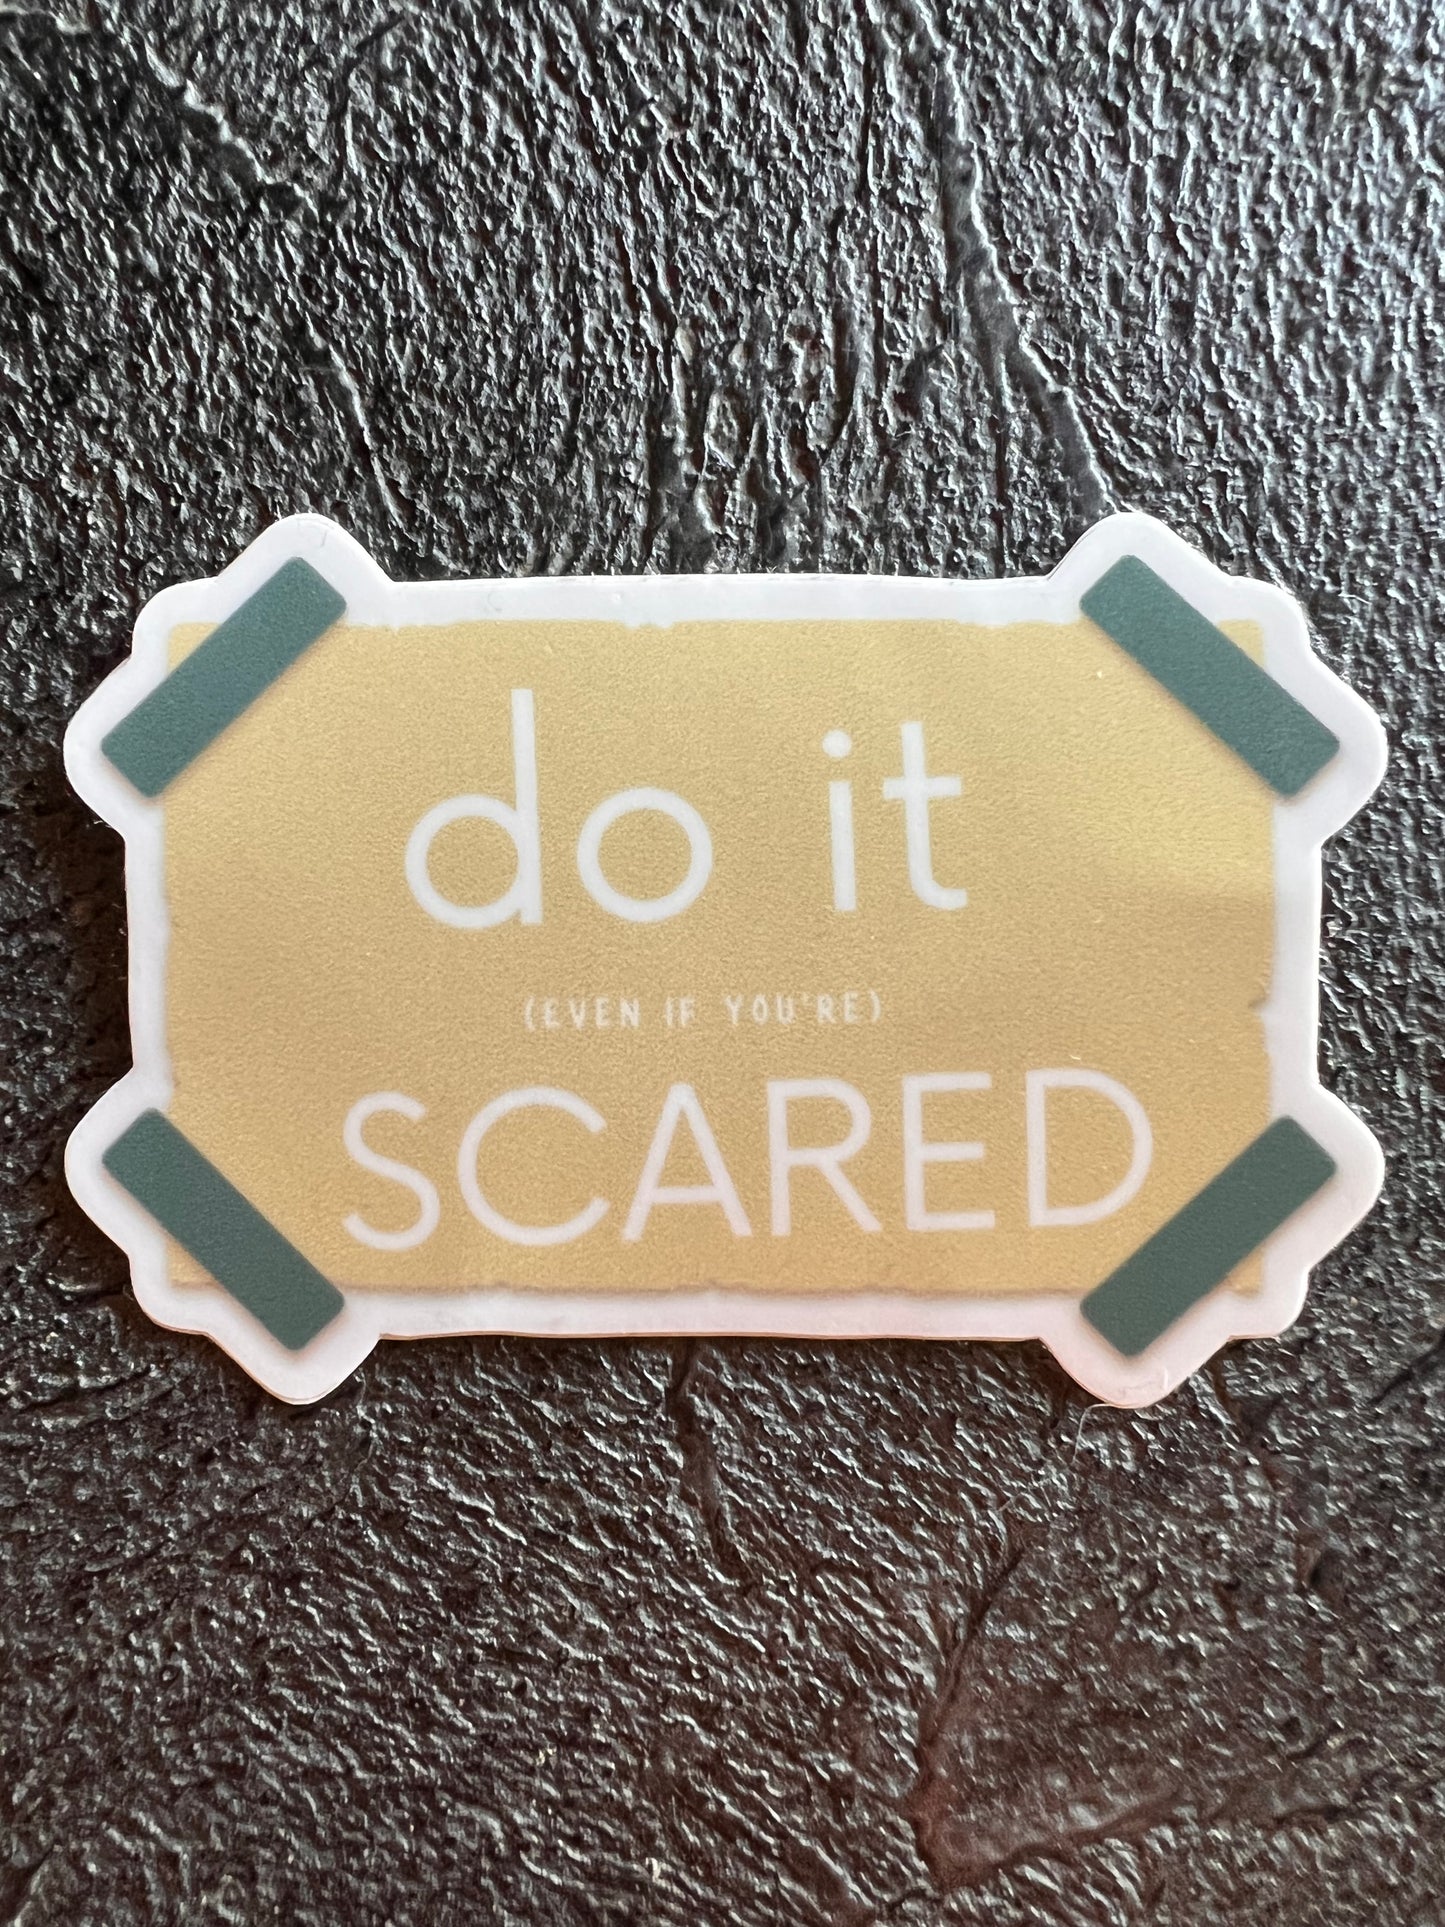 Do it scared sticker